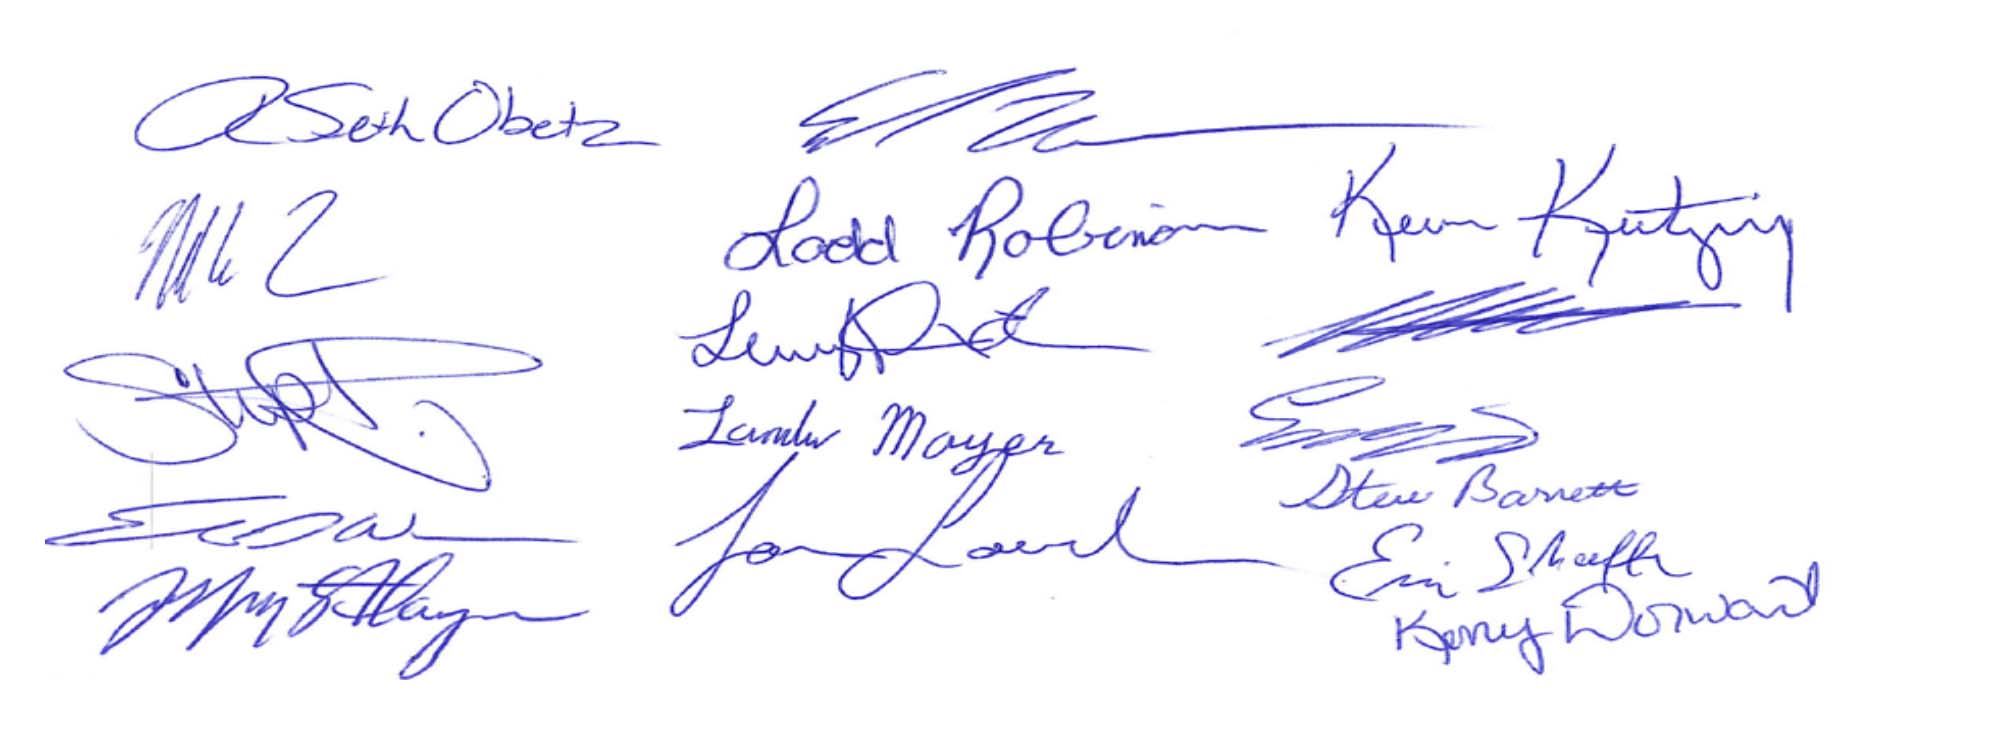 Seth Energy team signatures.